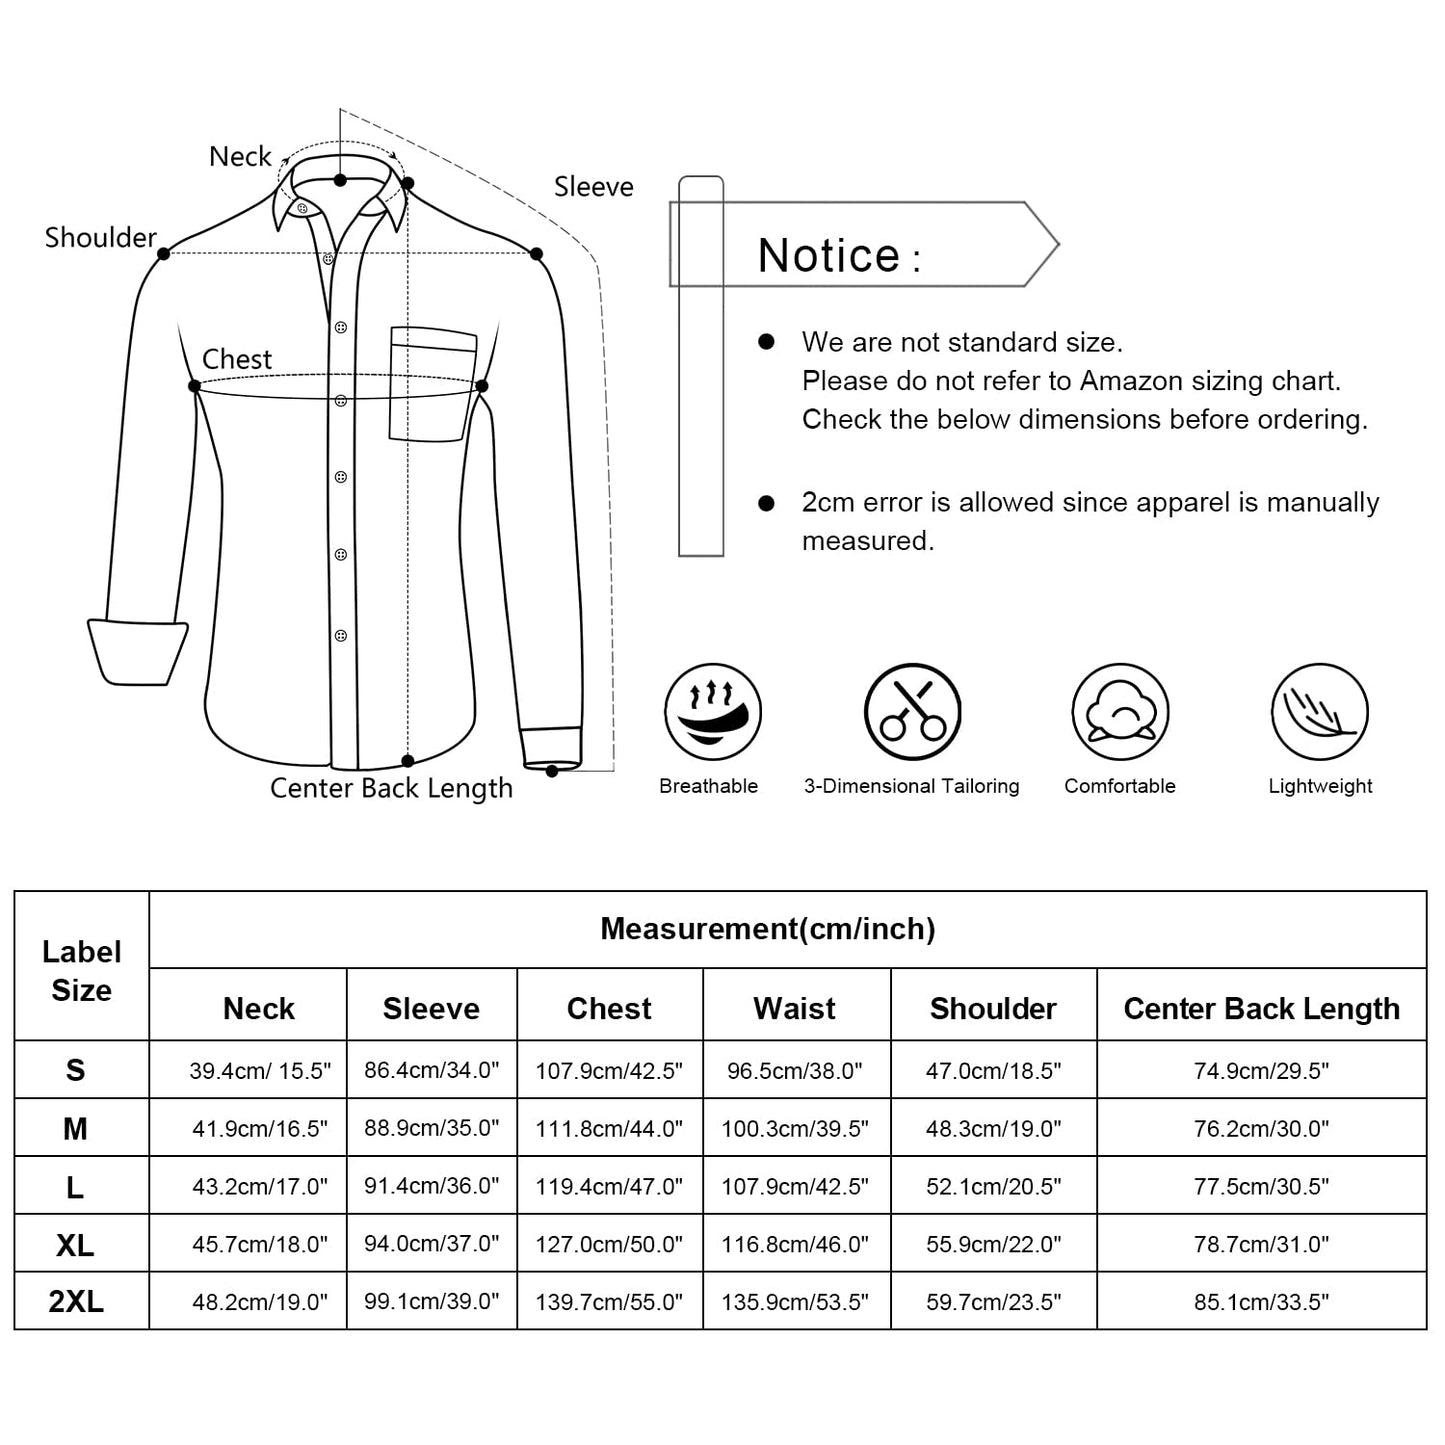 Men's Business Slim Fit Dress Shirt Long Sleeve Patchwork Button-Down Shirt, 004-Lilac